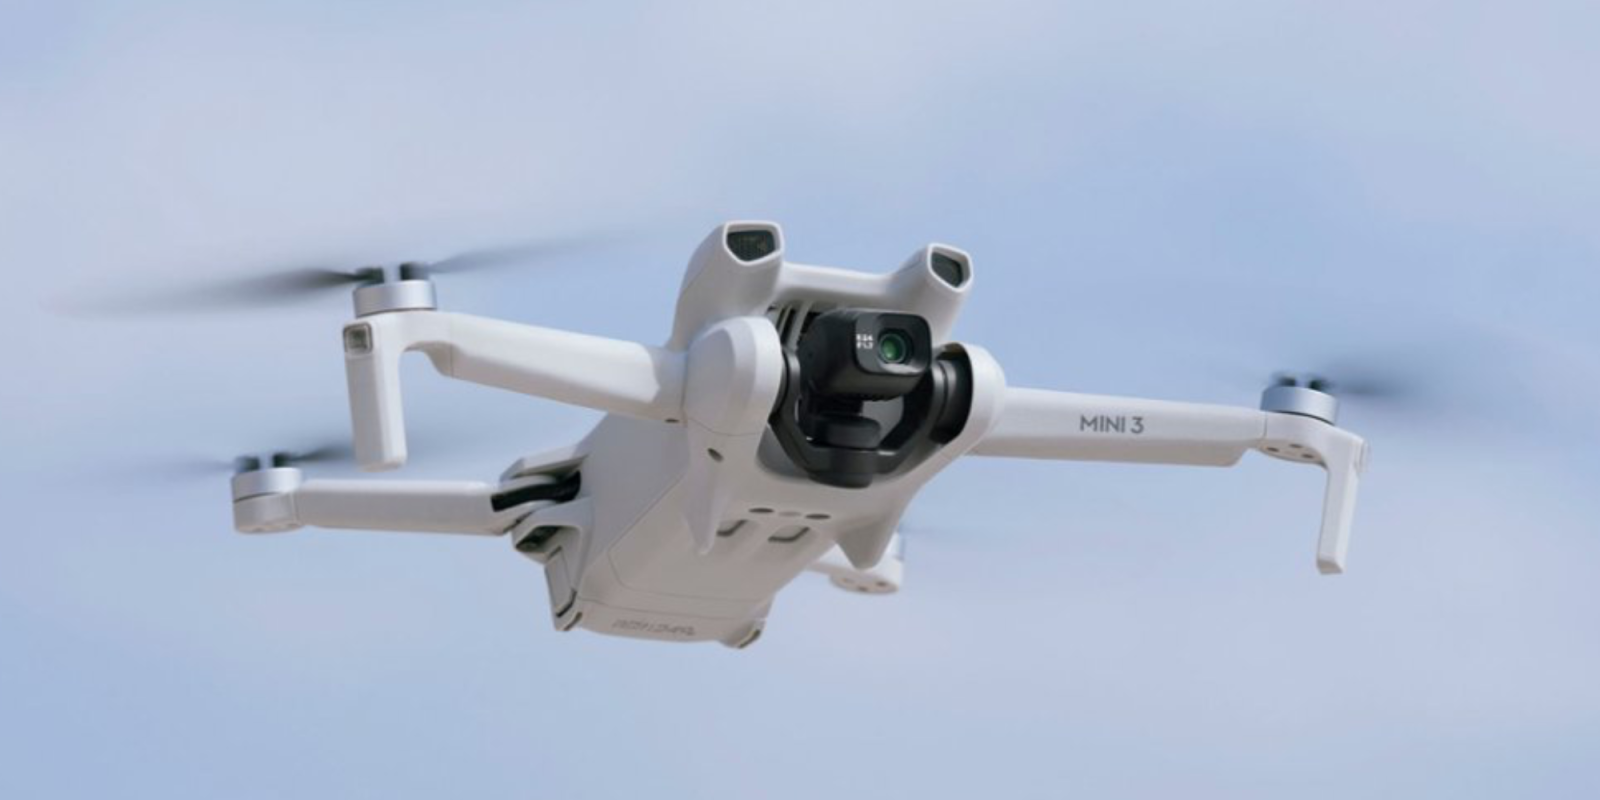 DJI Mini 3 drone only buy now amazon